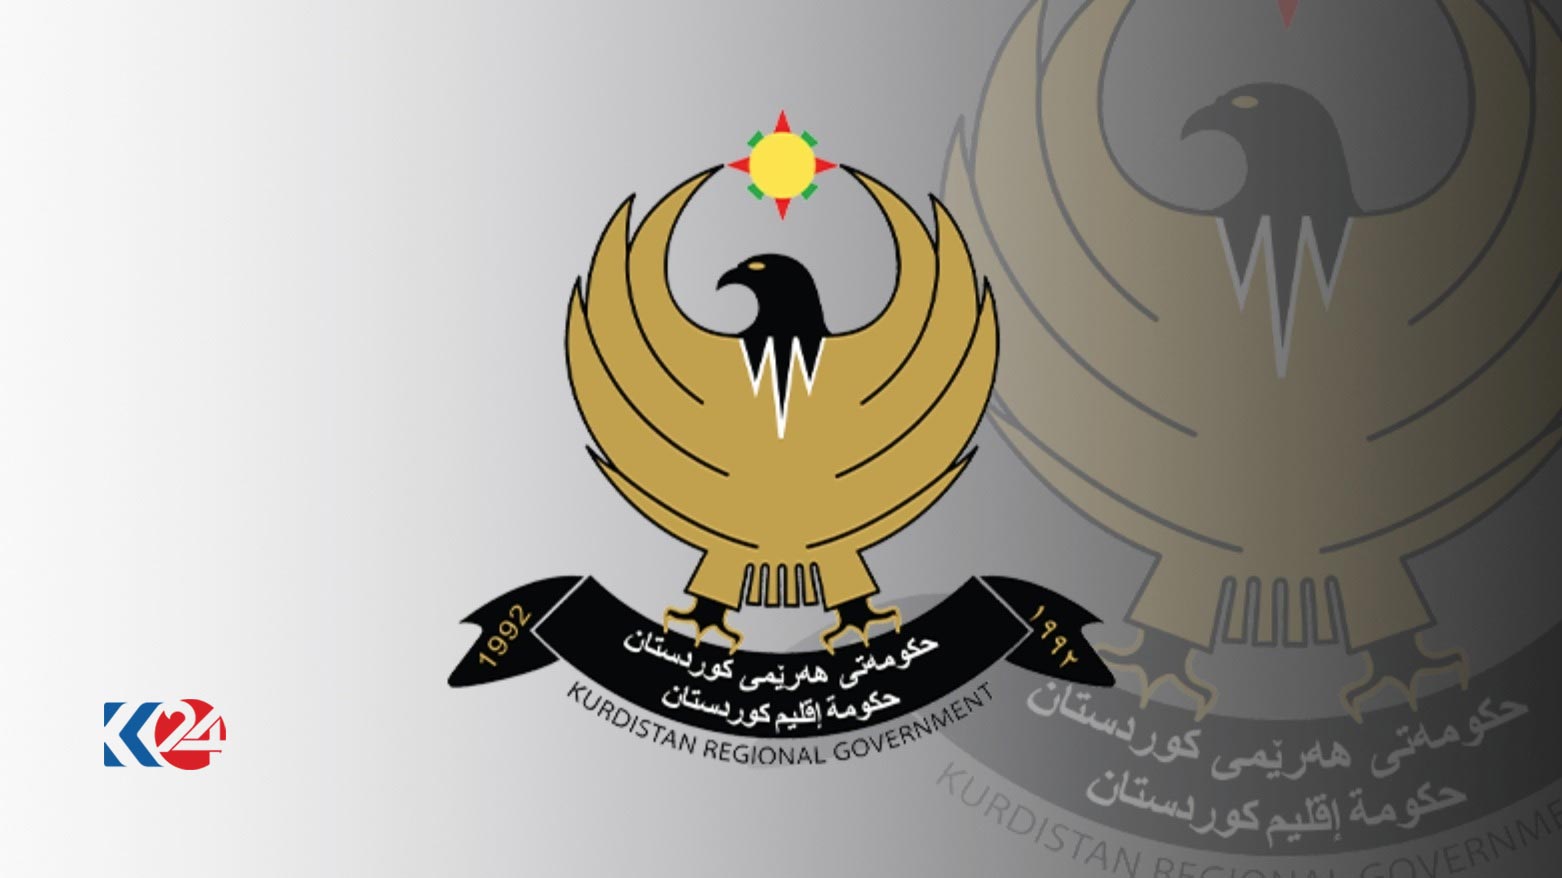 The emblem of Kurdistan Regional Government. (Photo: KRG)